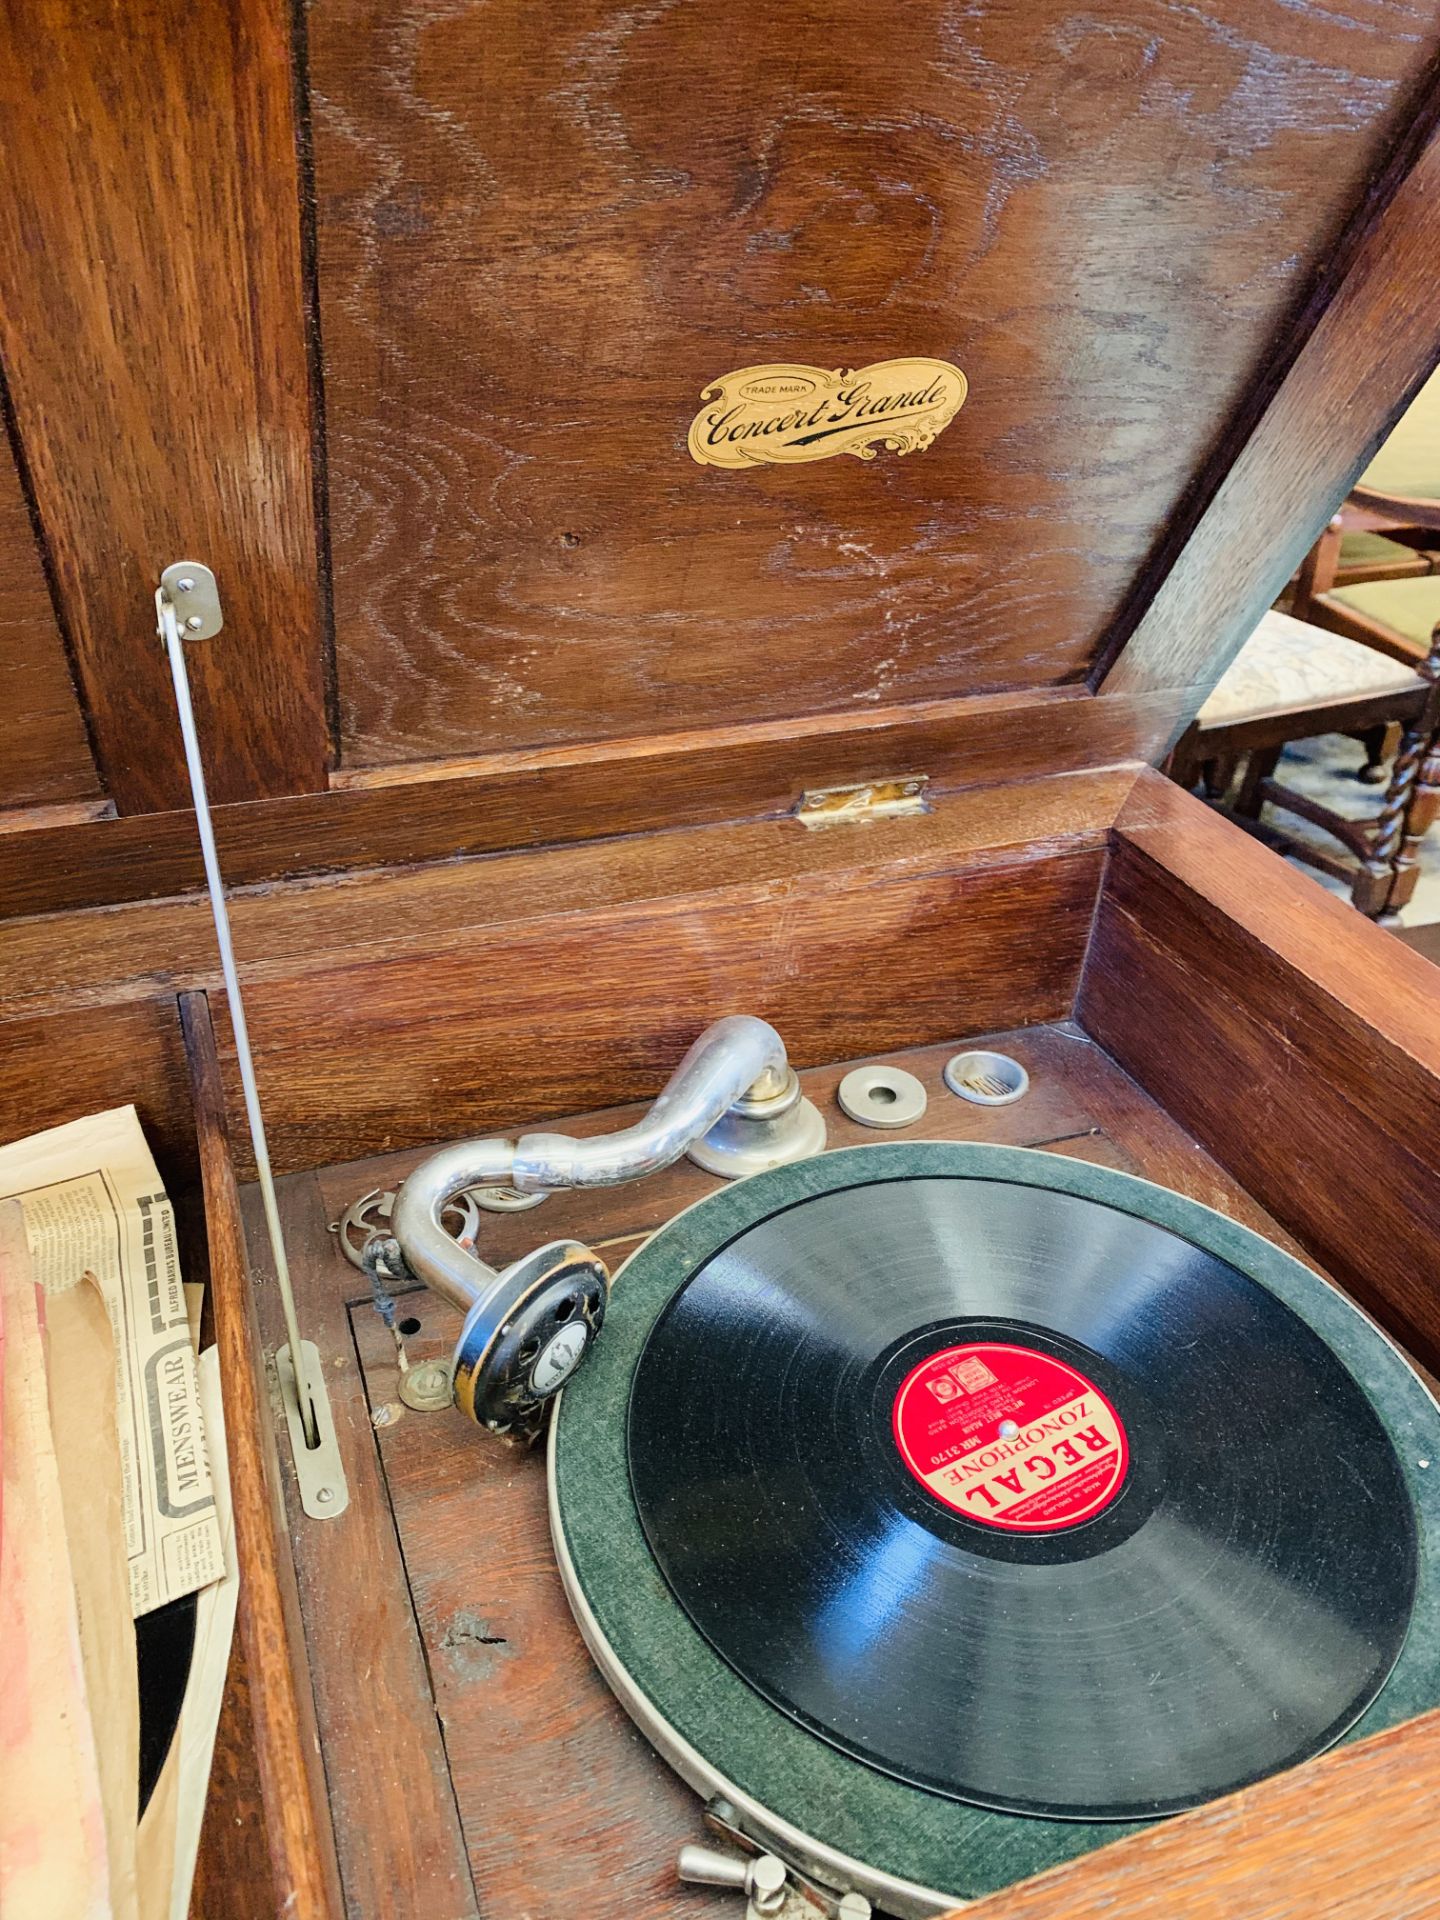 Concert Grande gramophone in oak cabinet. - Image 3 of 4